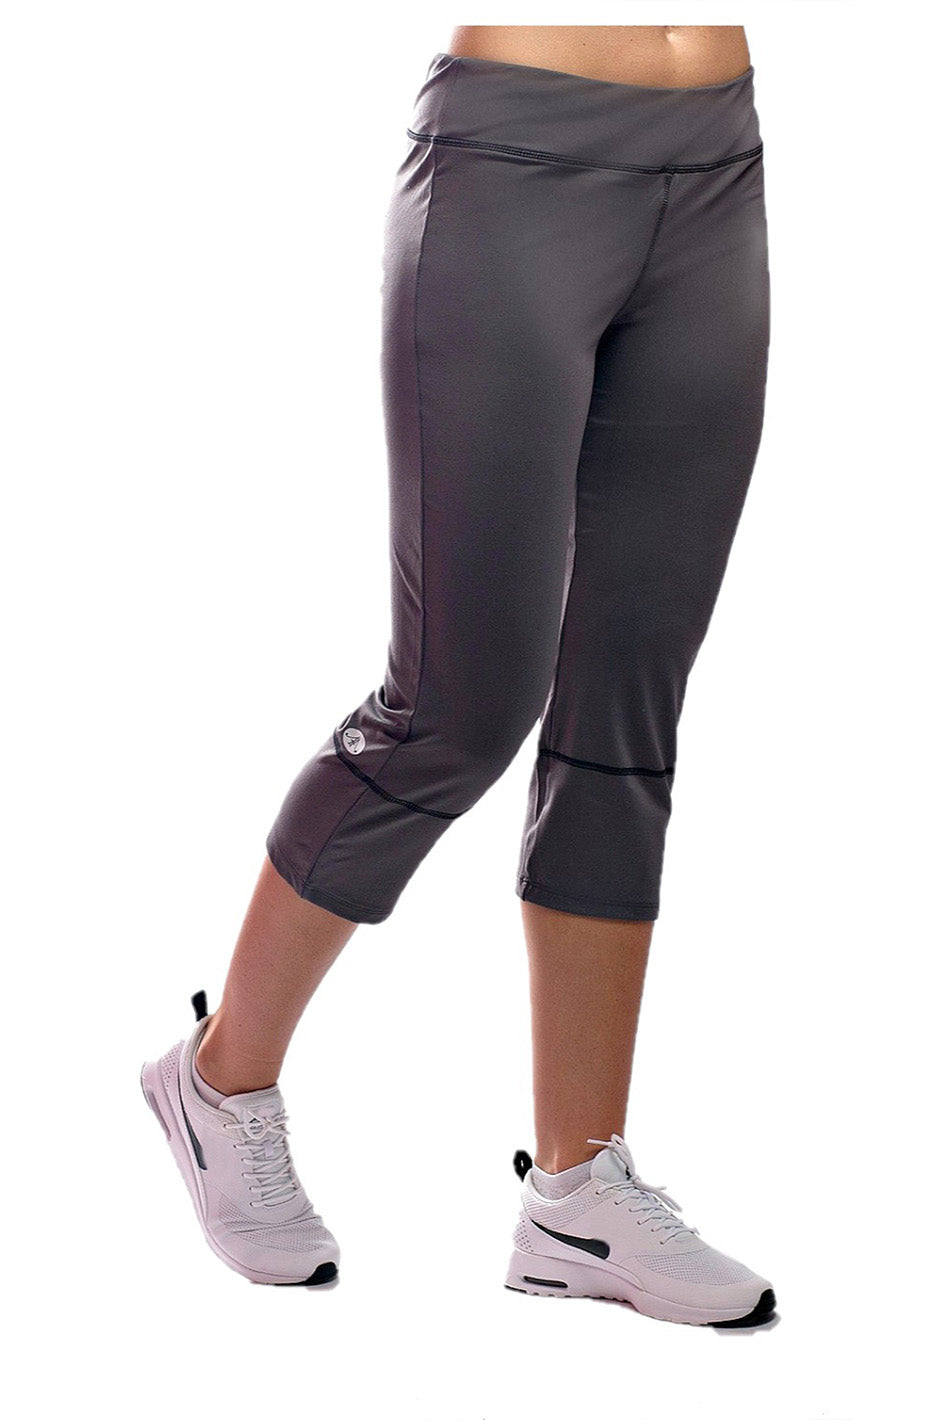 Lucy Powermax Black Capri Cropped Athletic Workout Casual Leggings